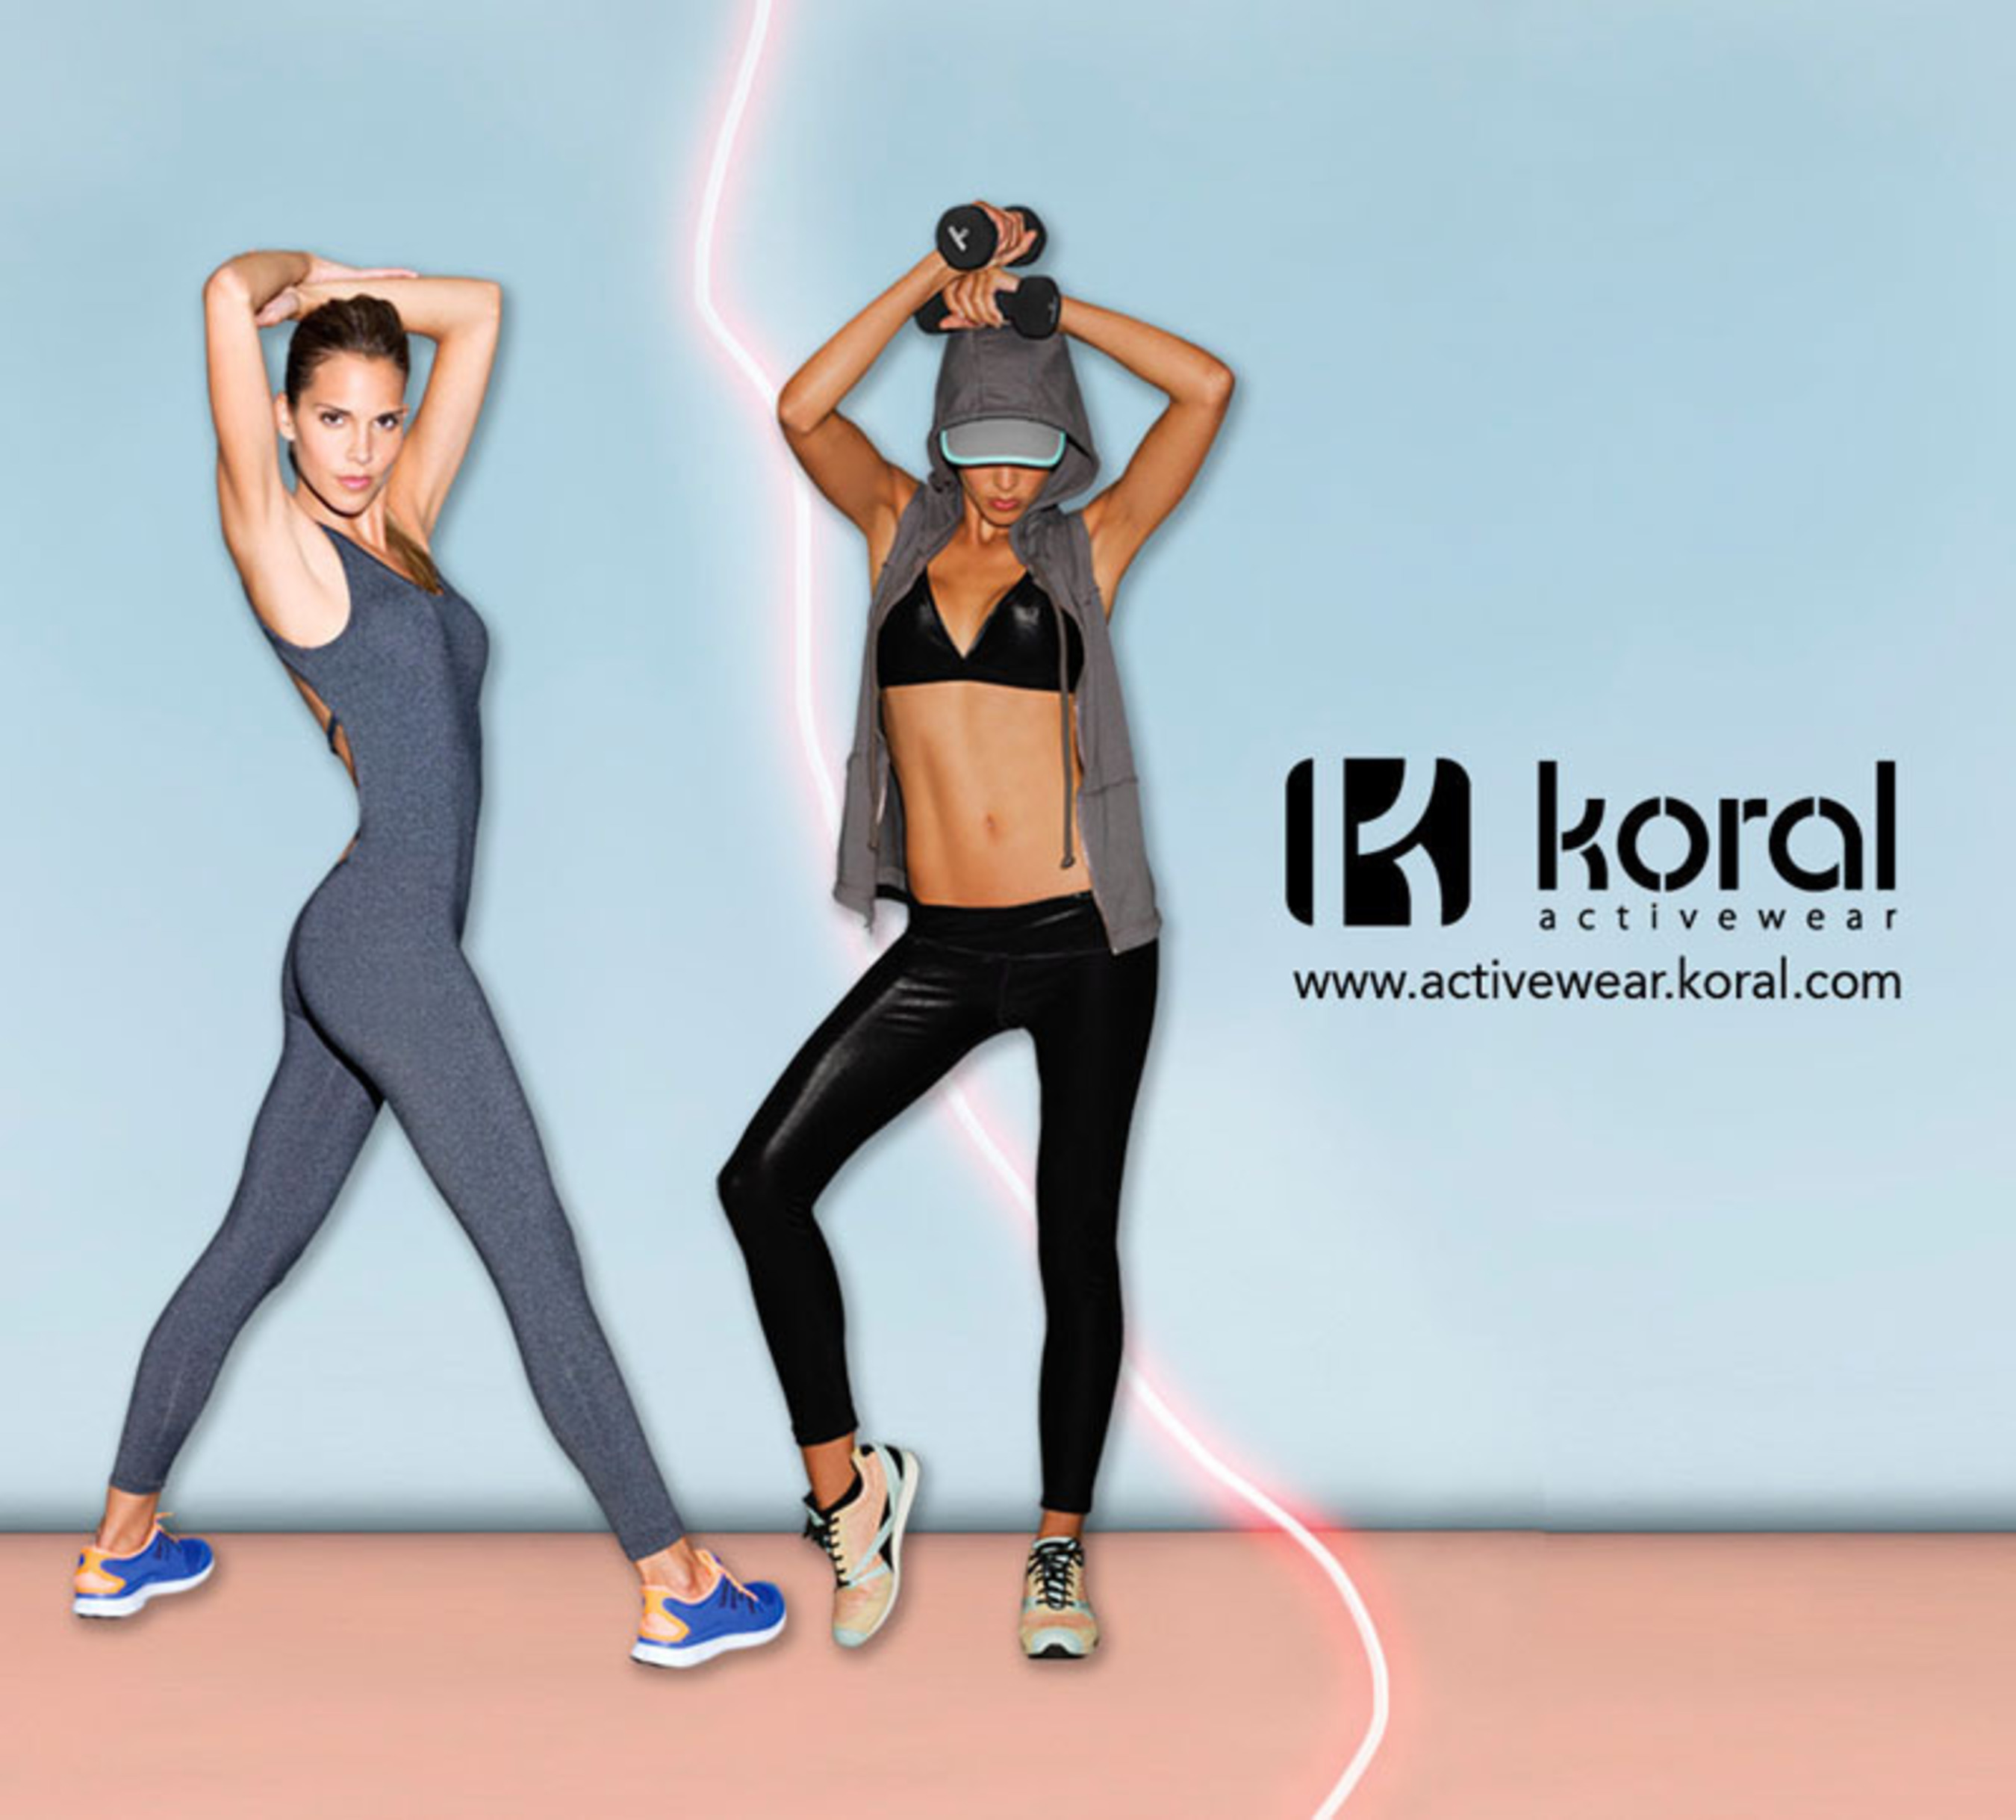 KORAL Women's Activewear - Stylish Leggings, Sports Bras & More